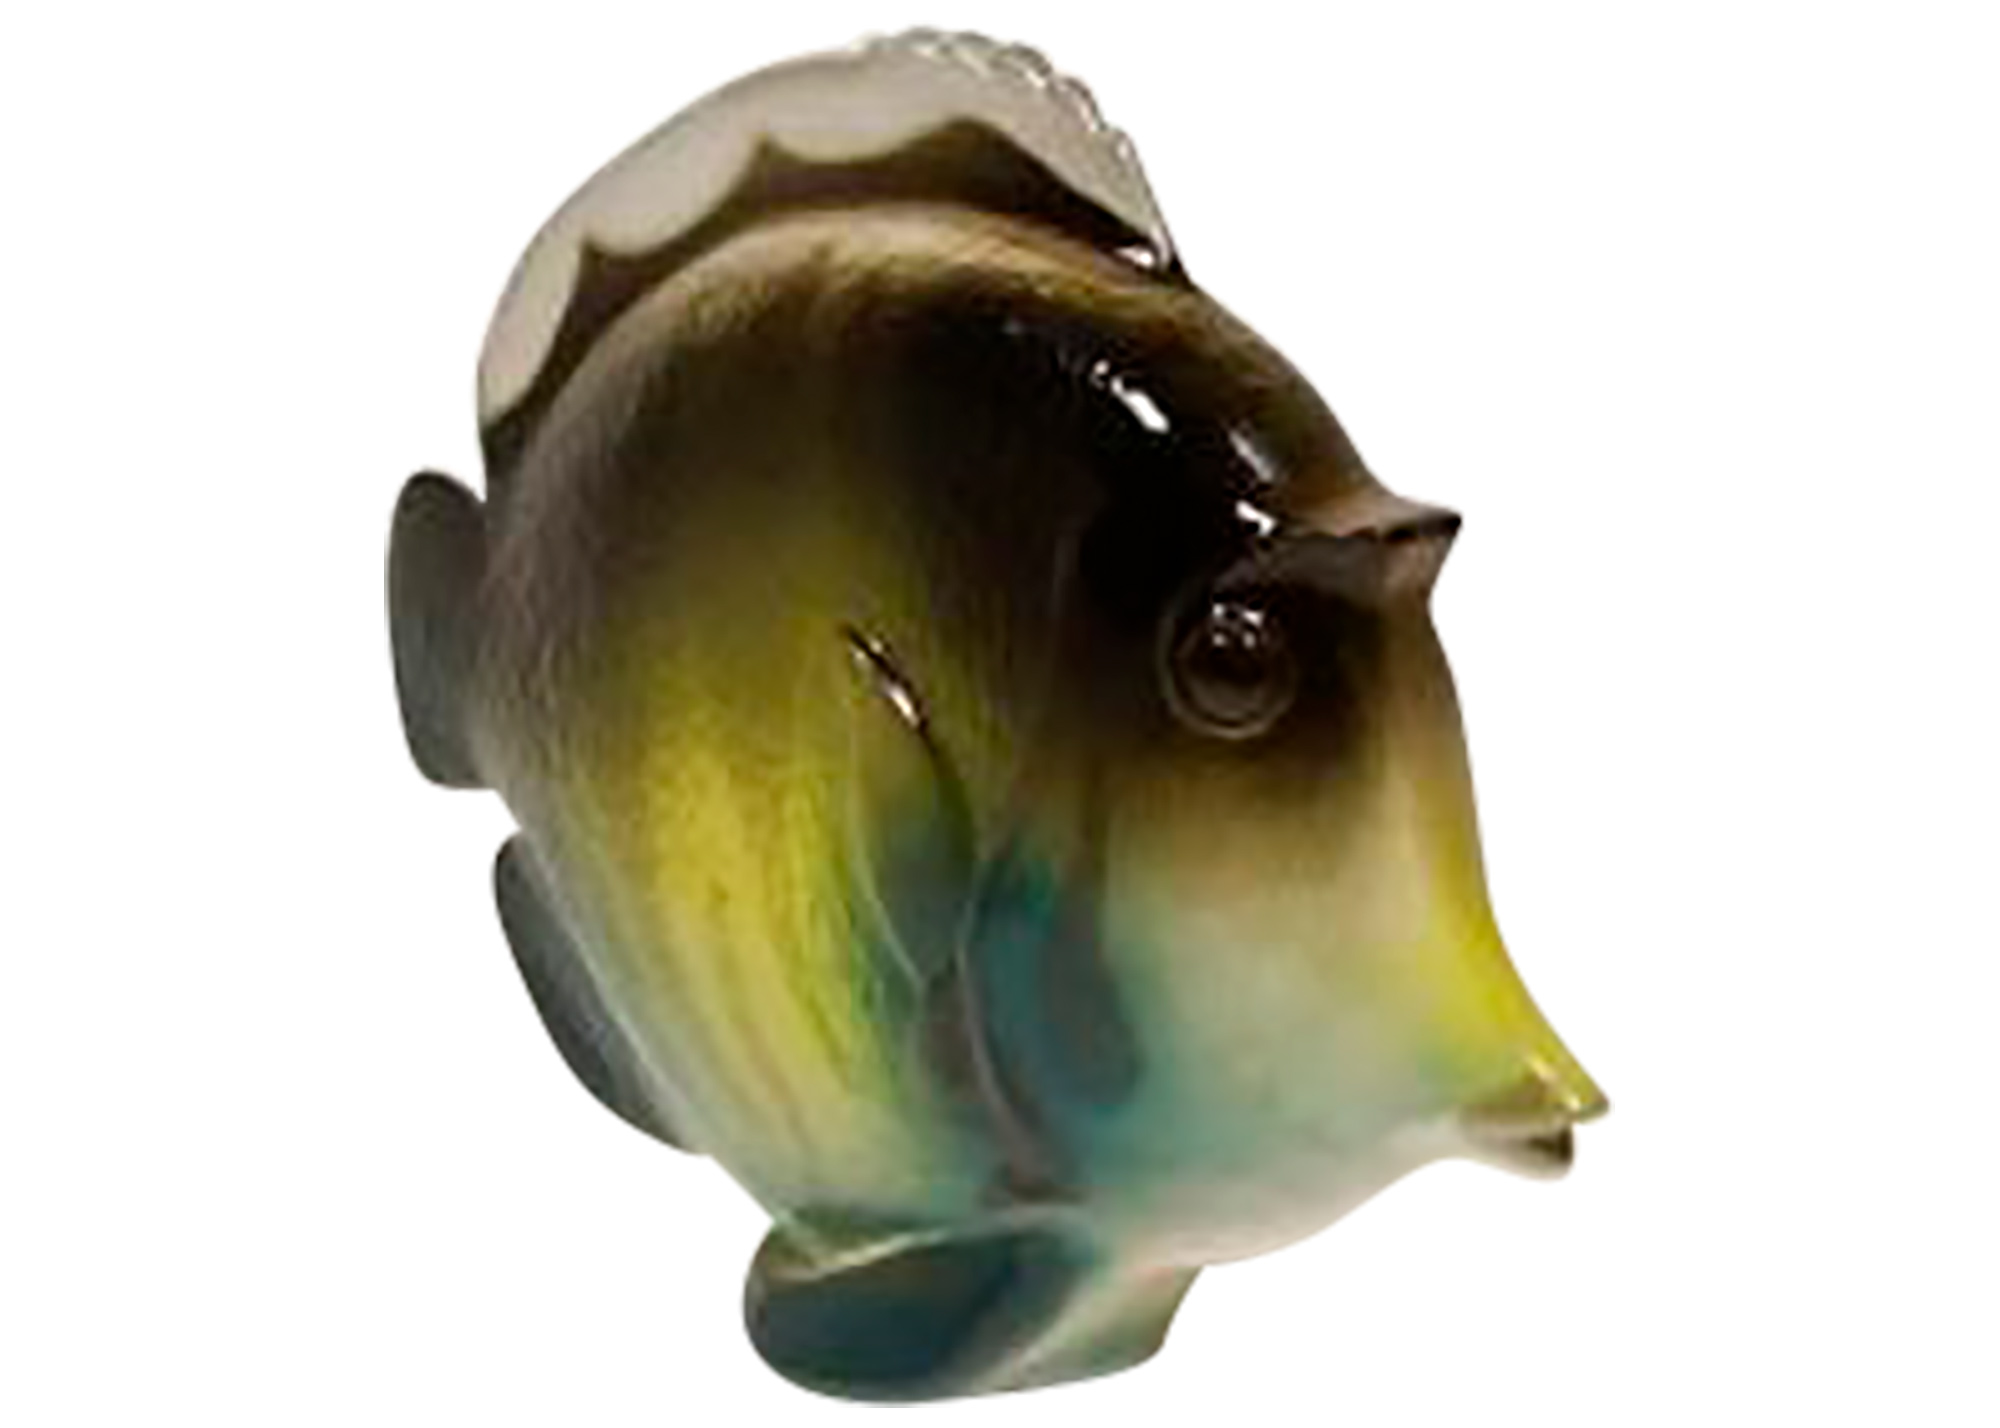 Buy Large Fish Figurine at GoldenCockerel.com